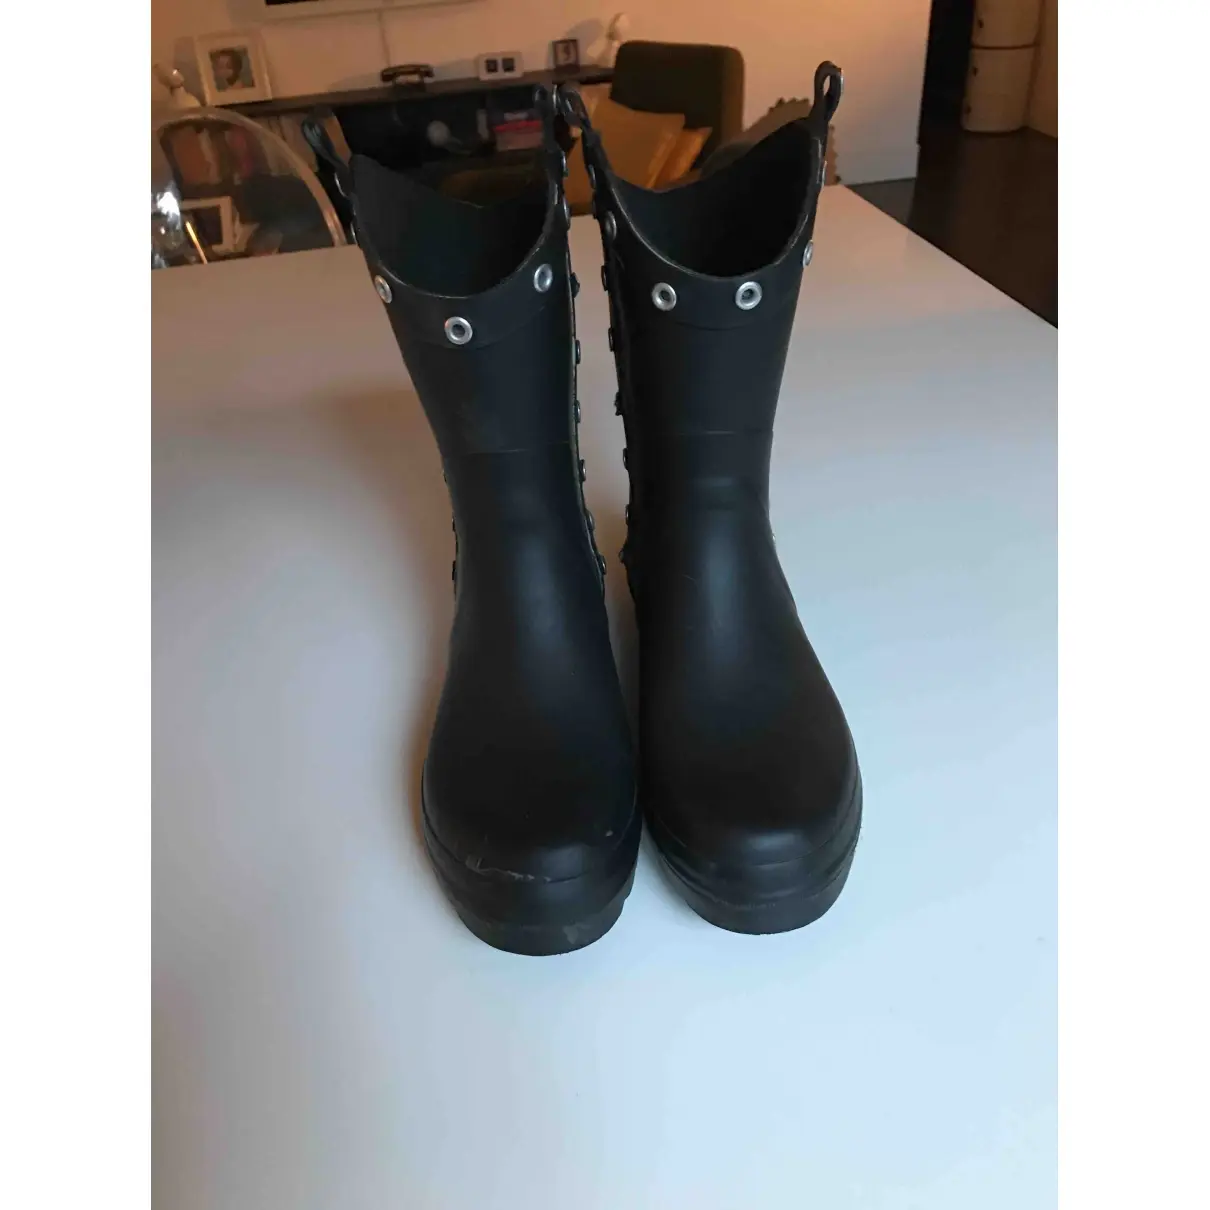 Tatoosh Wellington boots for sale